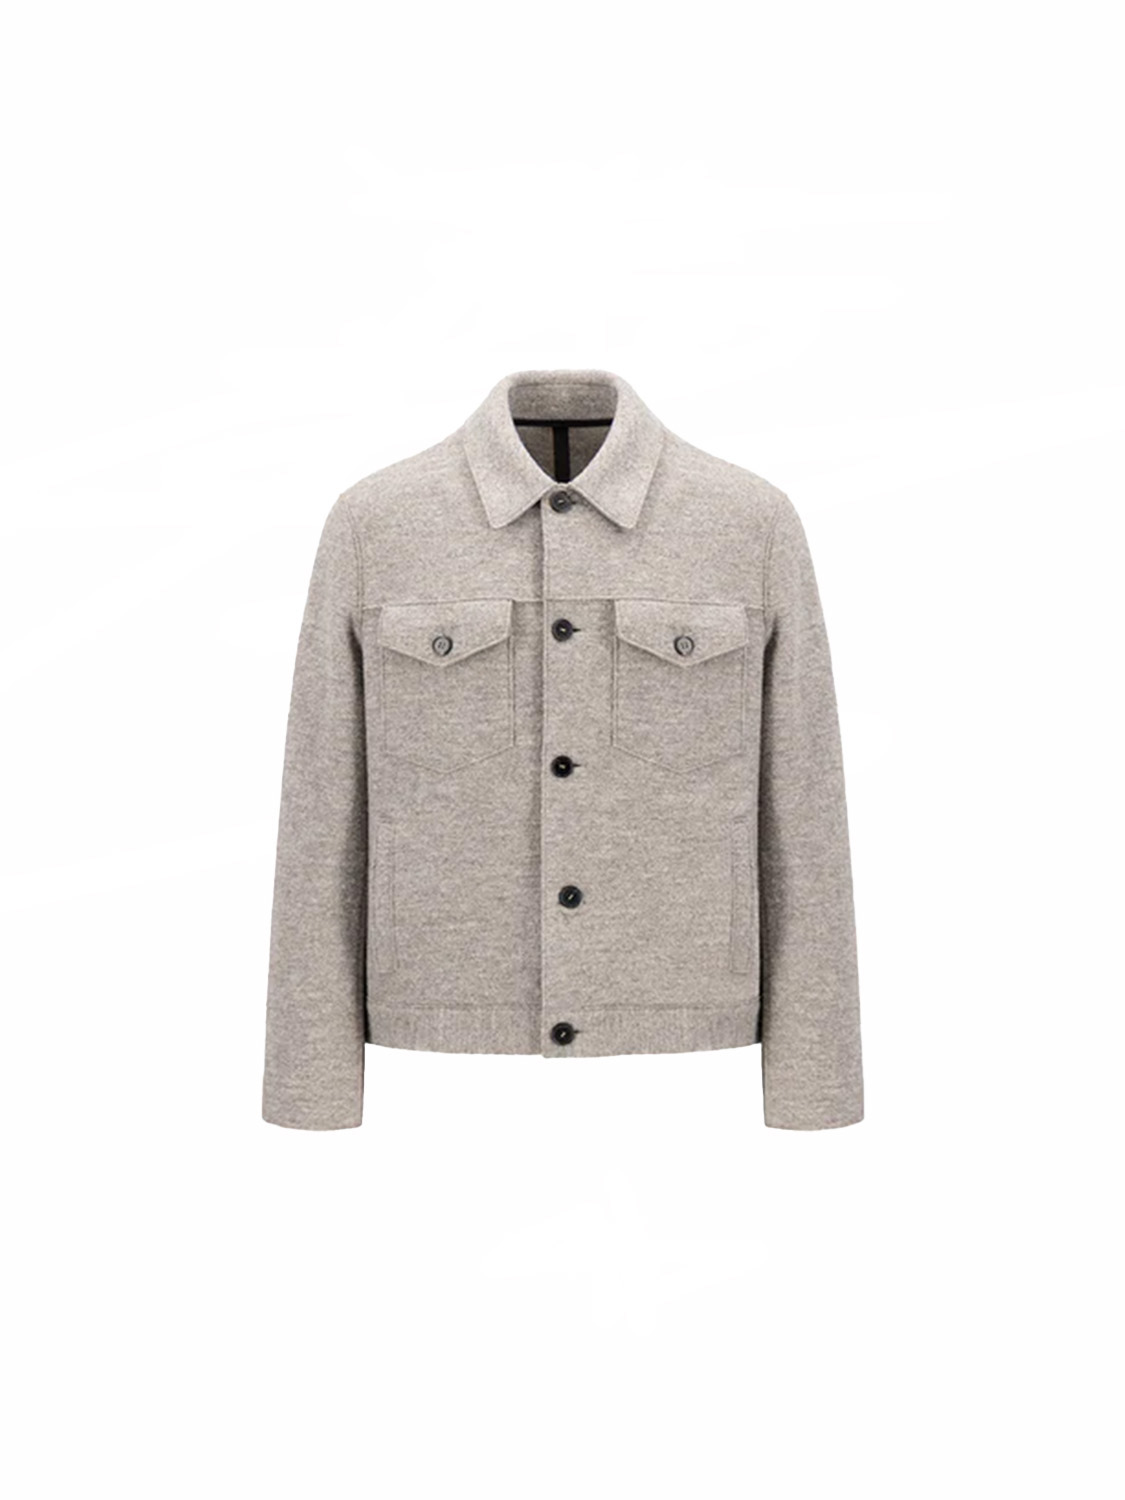 Shirt jacket made of milled wool 